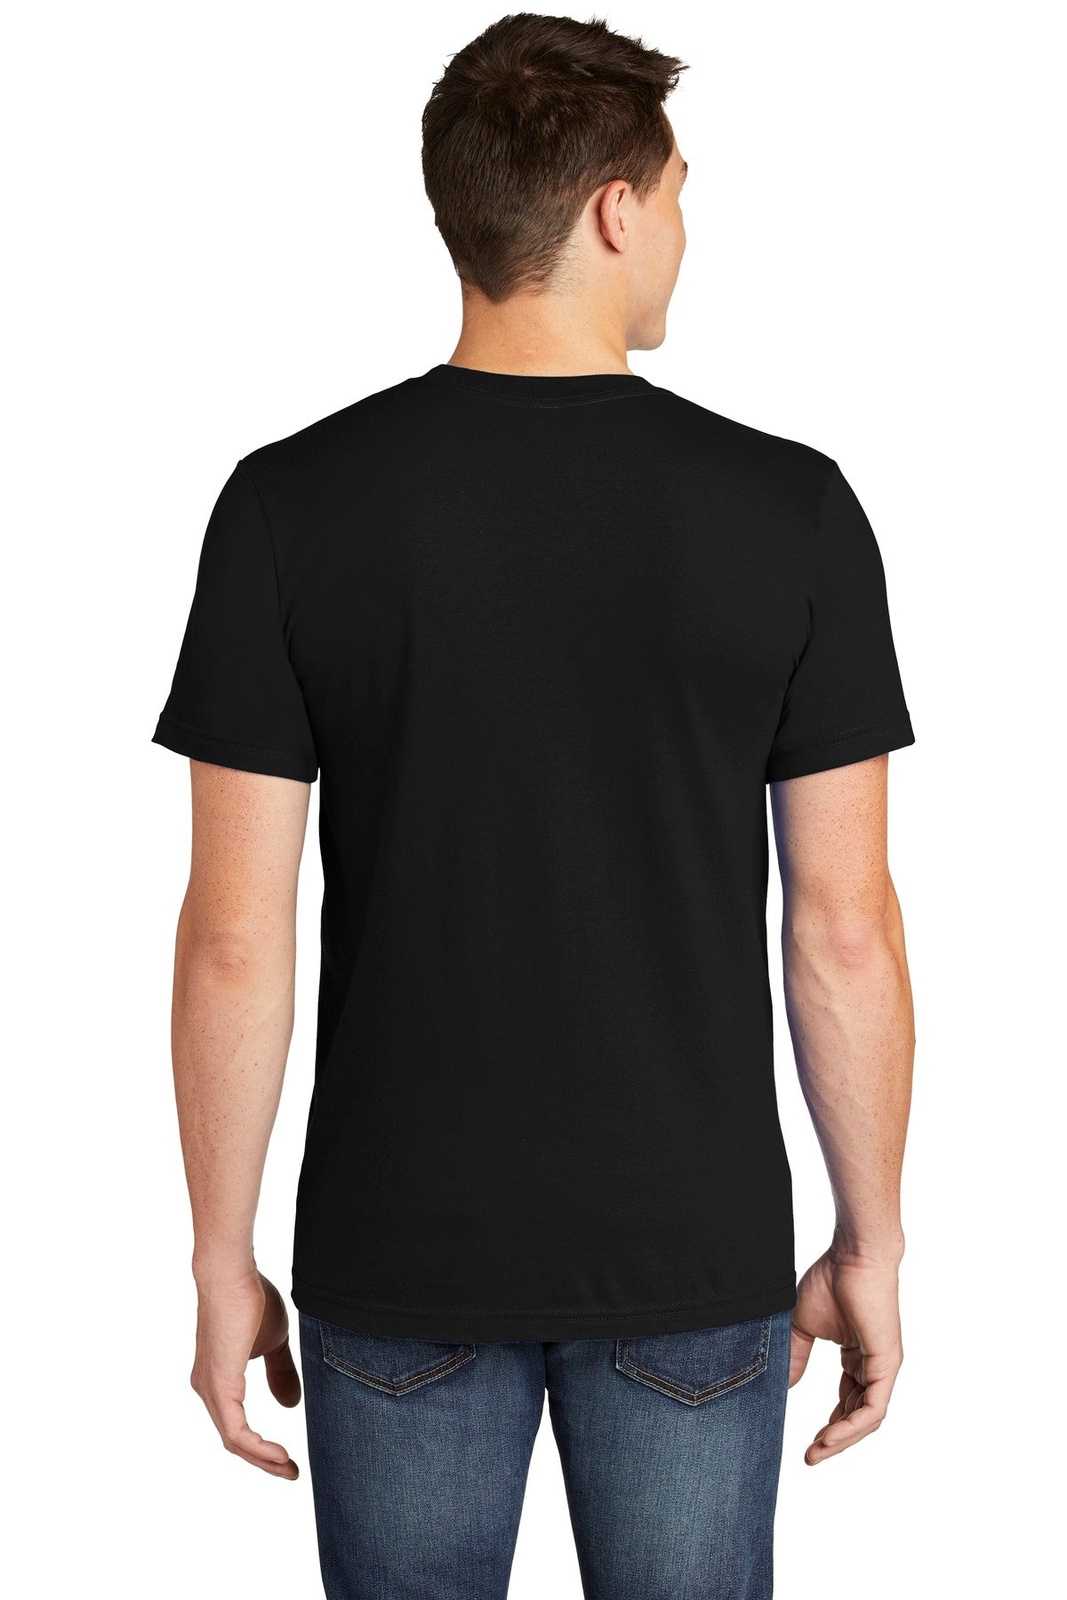 American Apparel 2001W Fine Jersey T-Shirt - Black - HIT a Double